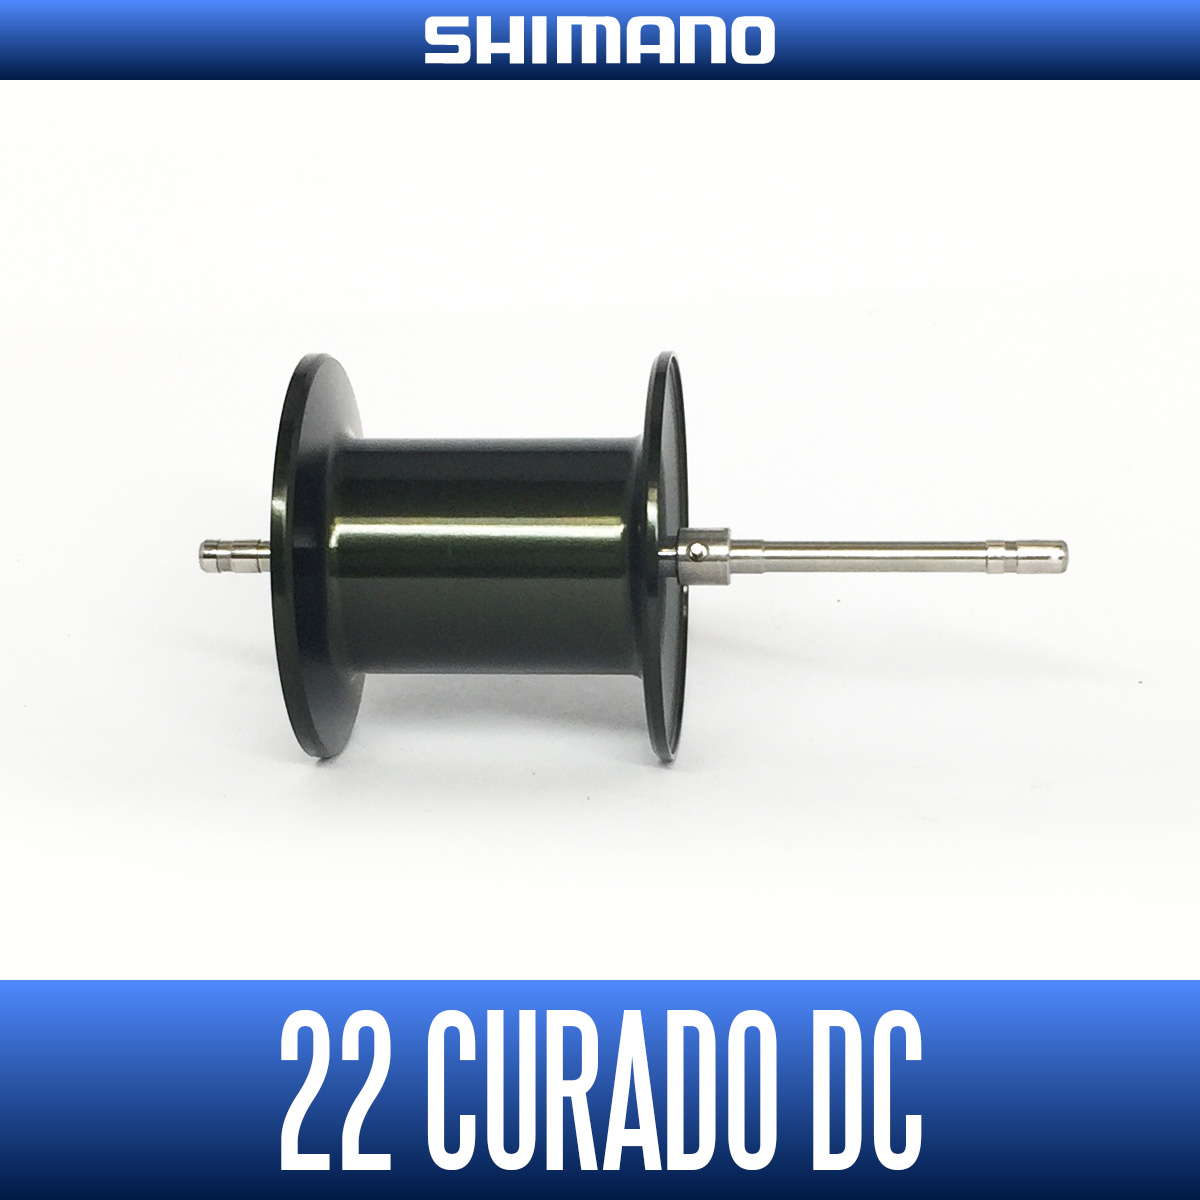 Shimano 22 Curado DC 201XG (Left)